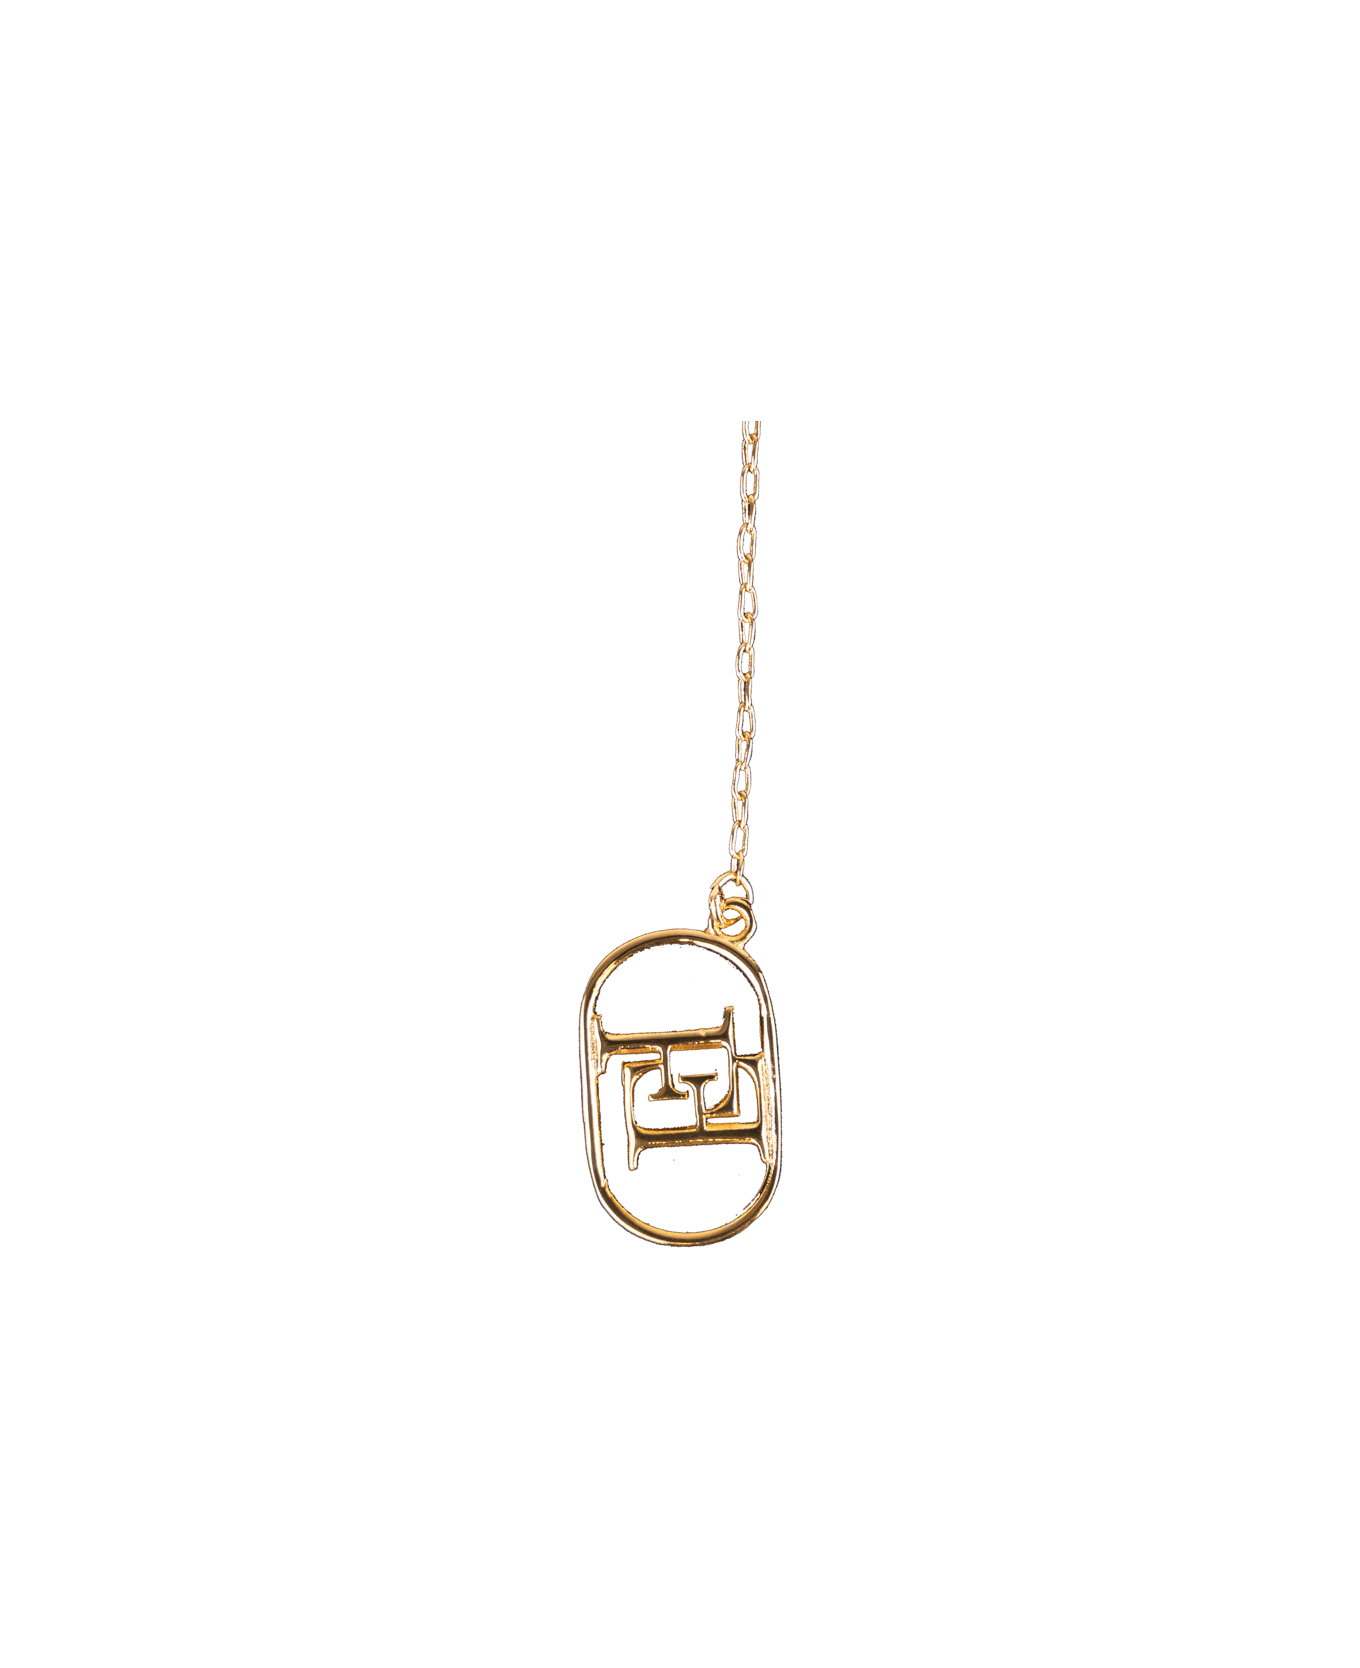 Elisabetta Franchi Dangle Earrings With Oval Logo - Oro giallo イヤリング